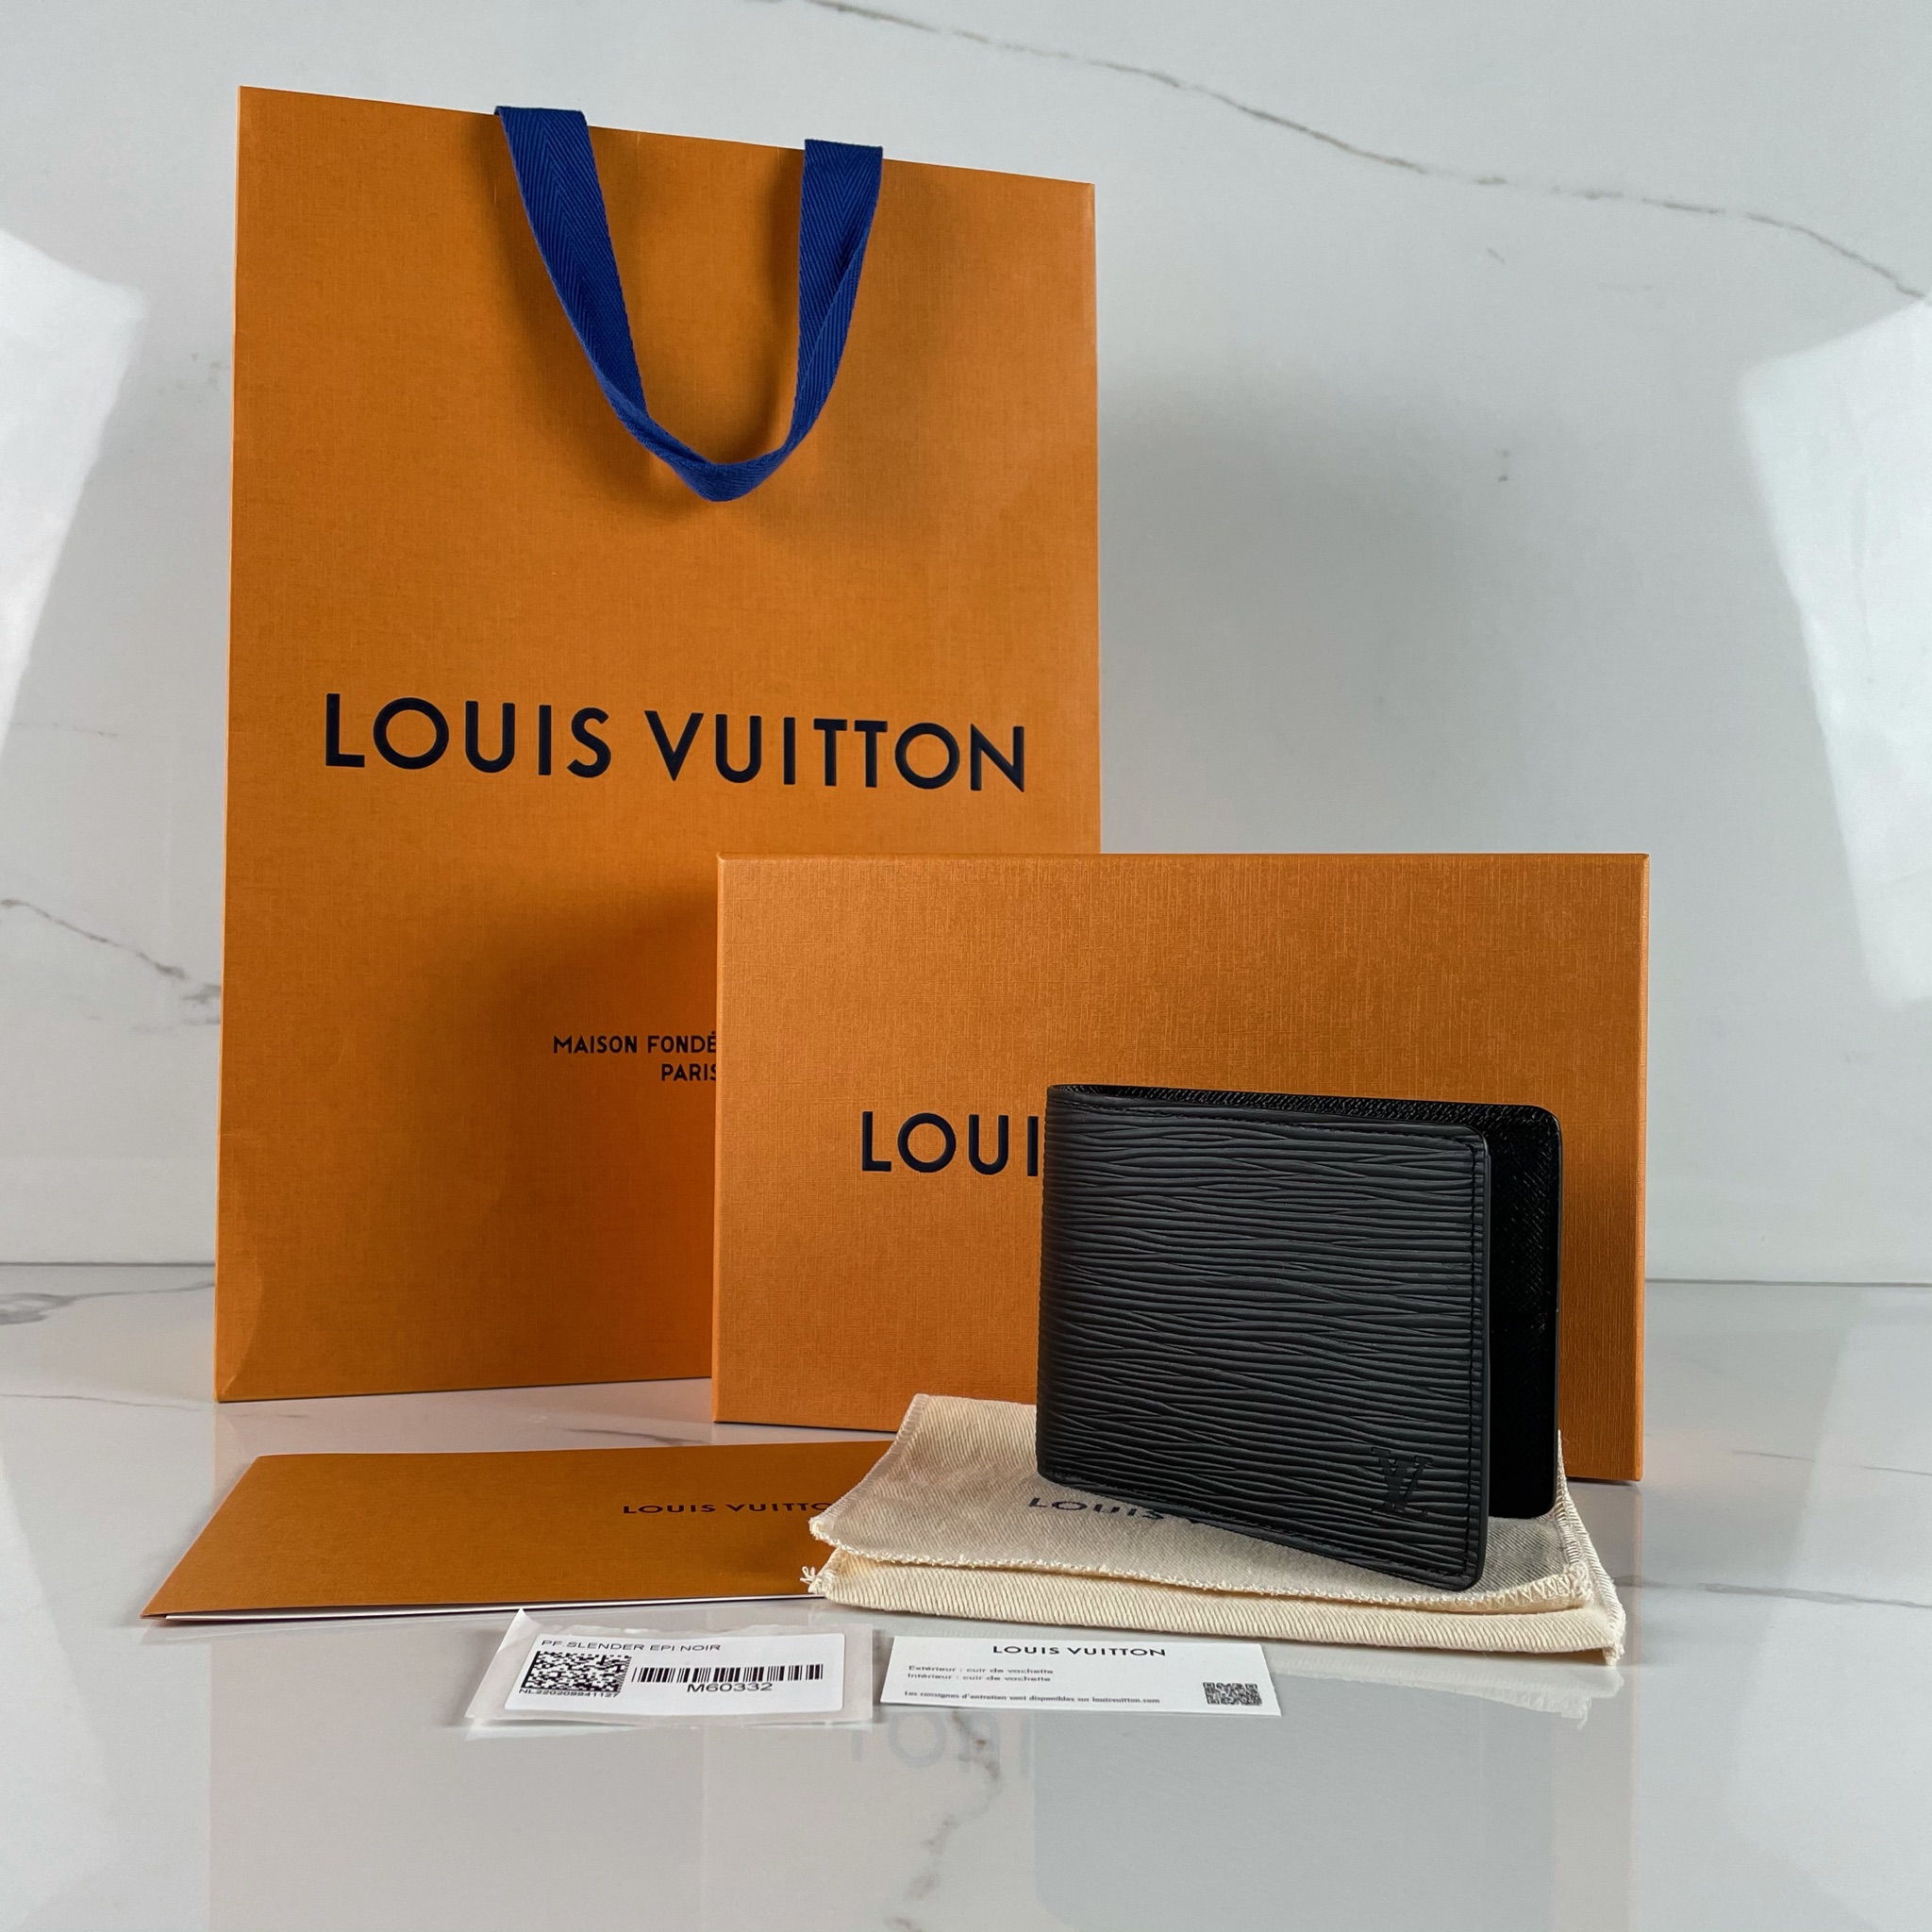 Replica Louis Vuitton Slender Wallet Epi Leather M60332 Fake Sale Online